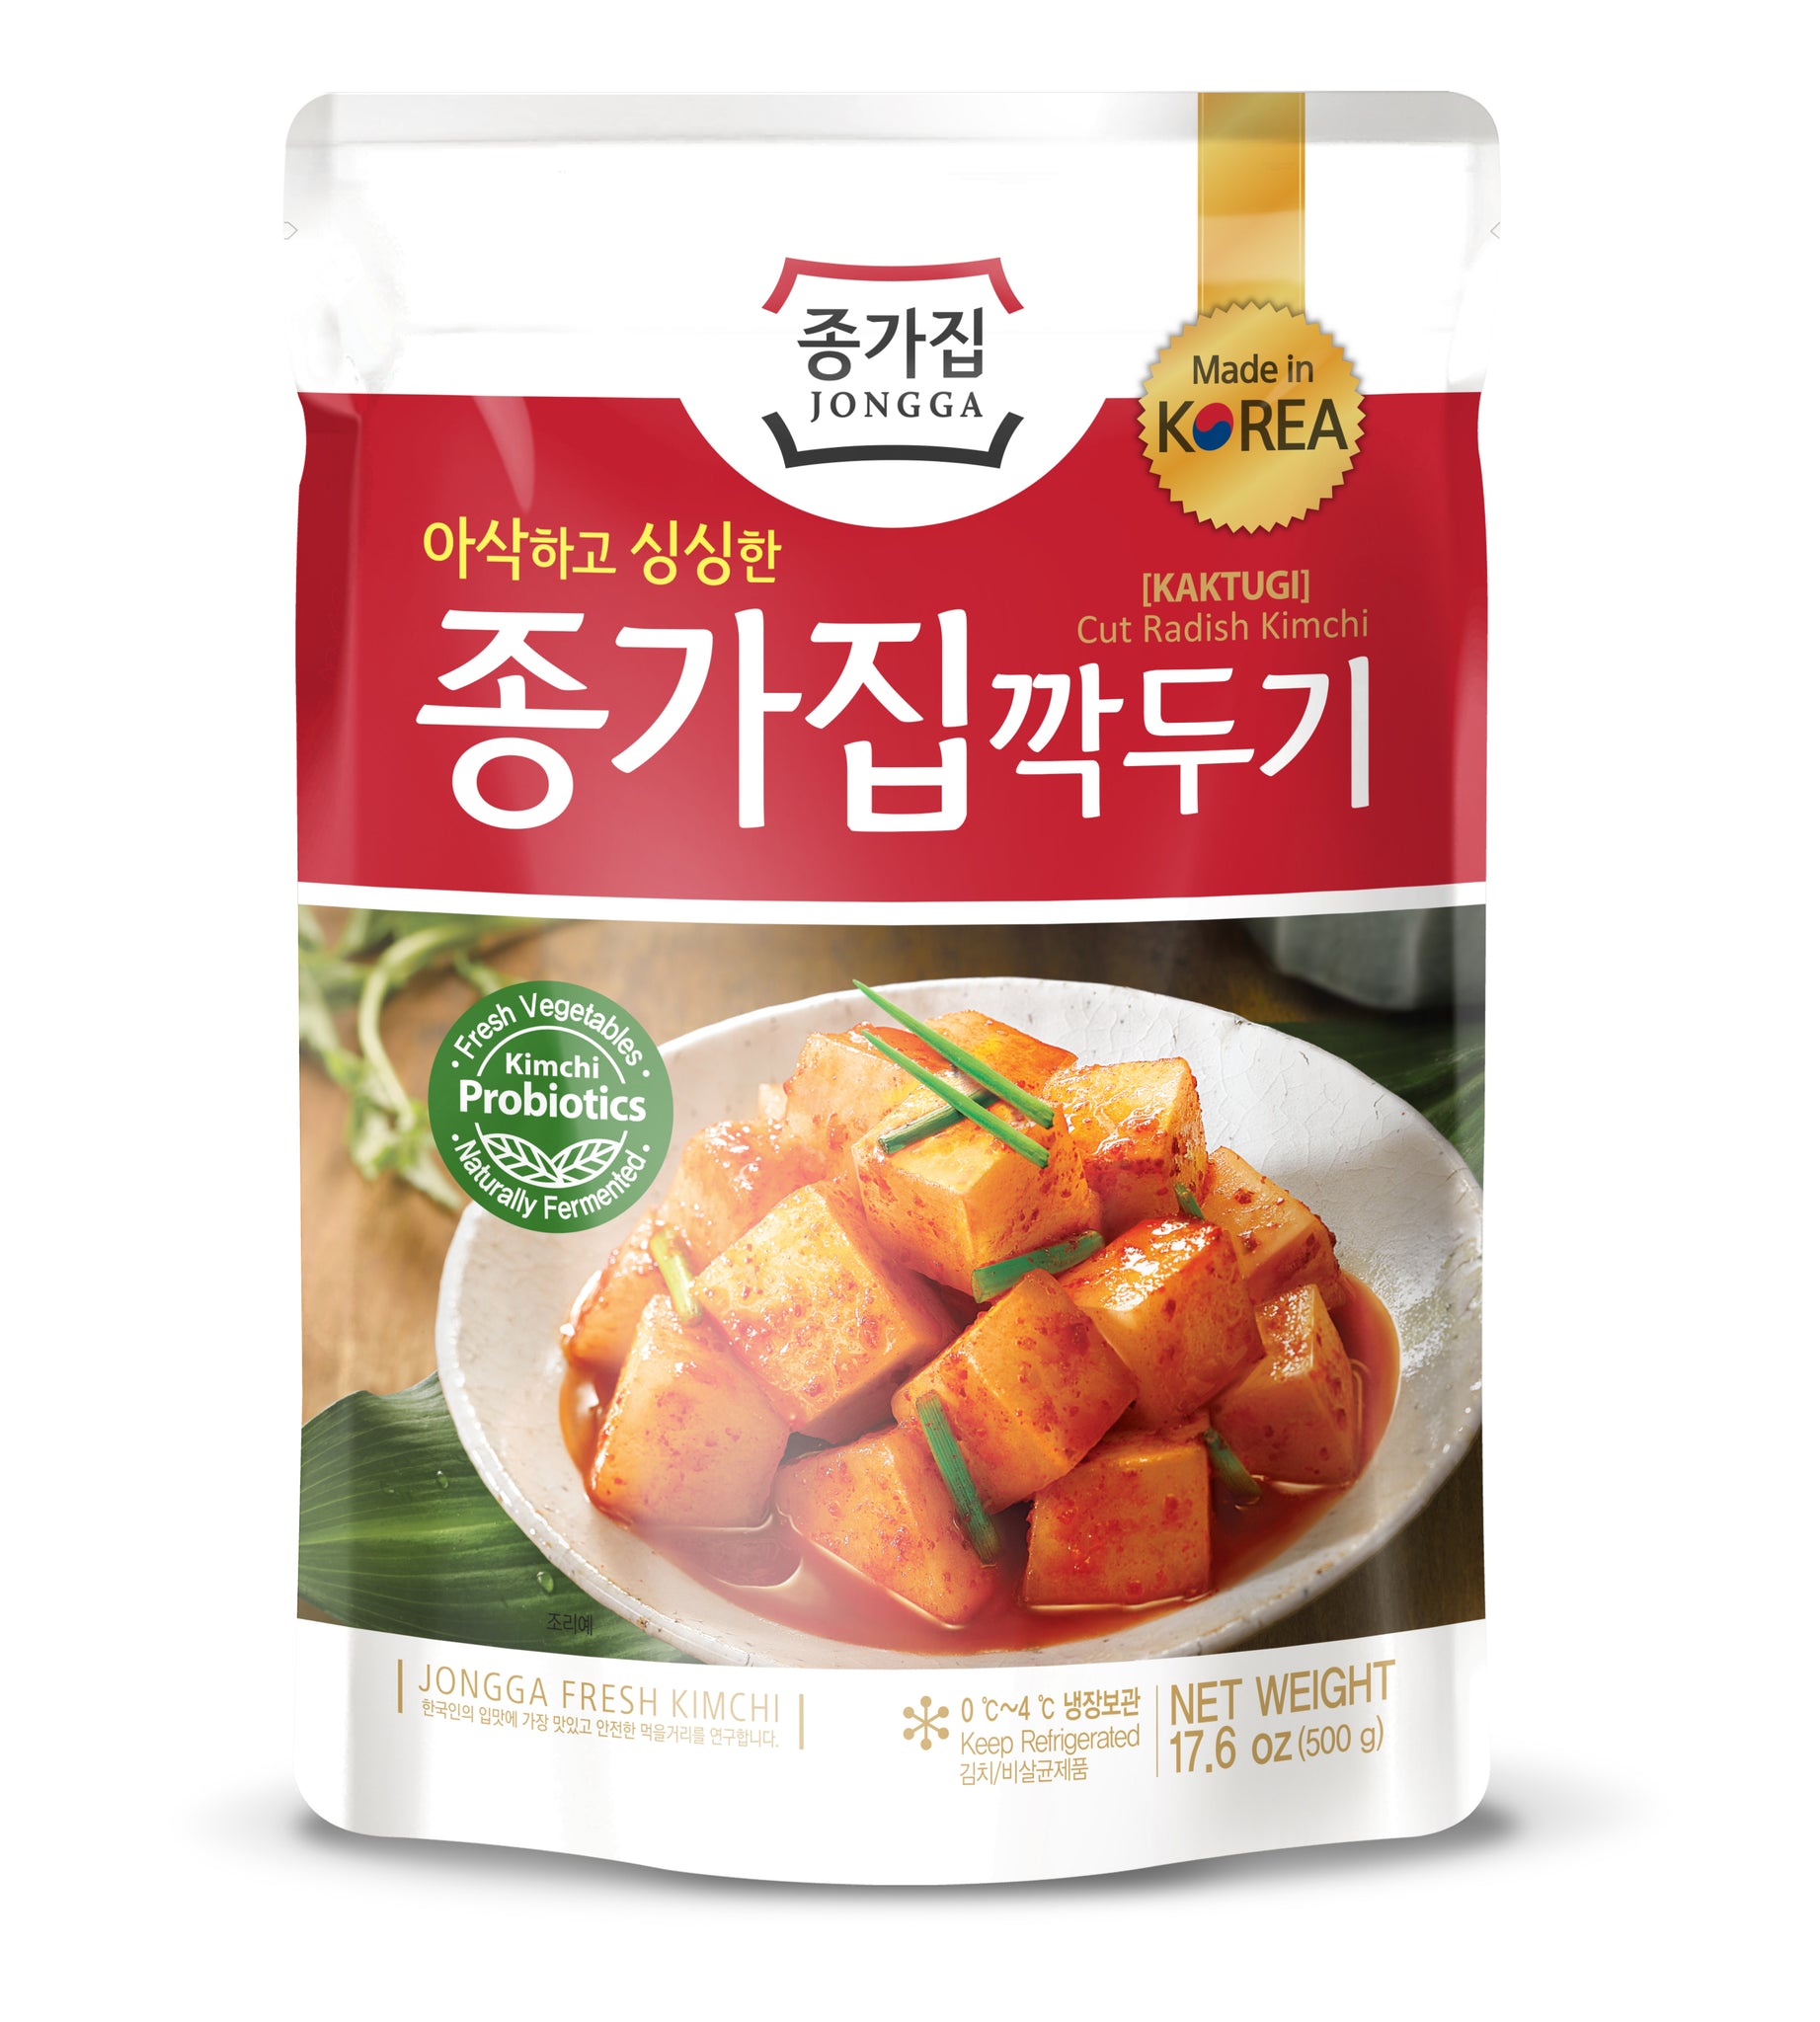 Jongga Cut Radish Kimchi 종가 깍두기 500g (1.1 LBS)